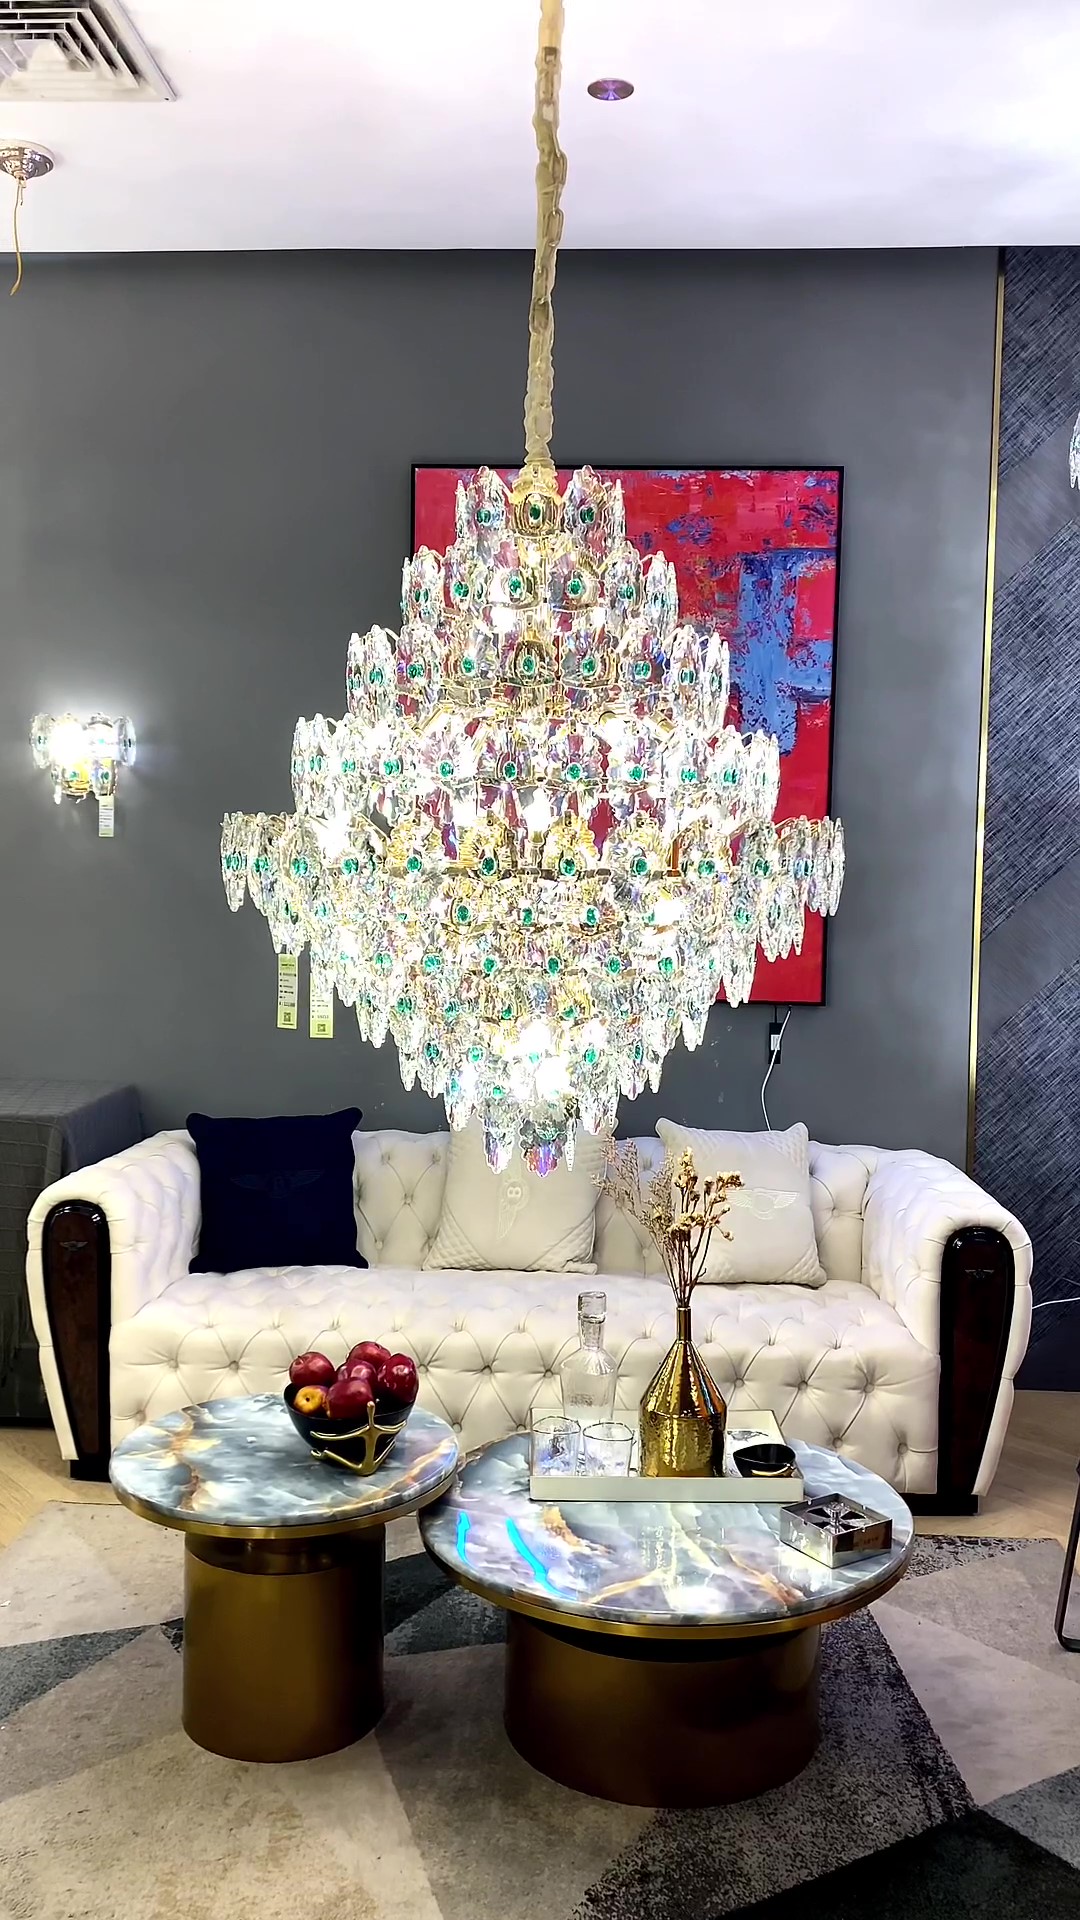 Dinning Living Room Indoor Lighting Home Fancy Modern Luxury Hanging Vintage K9 Crystal Chandeliers Pendant Light